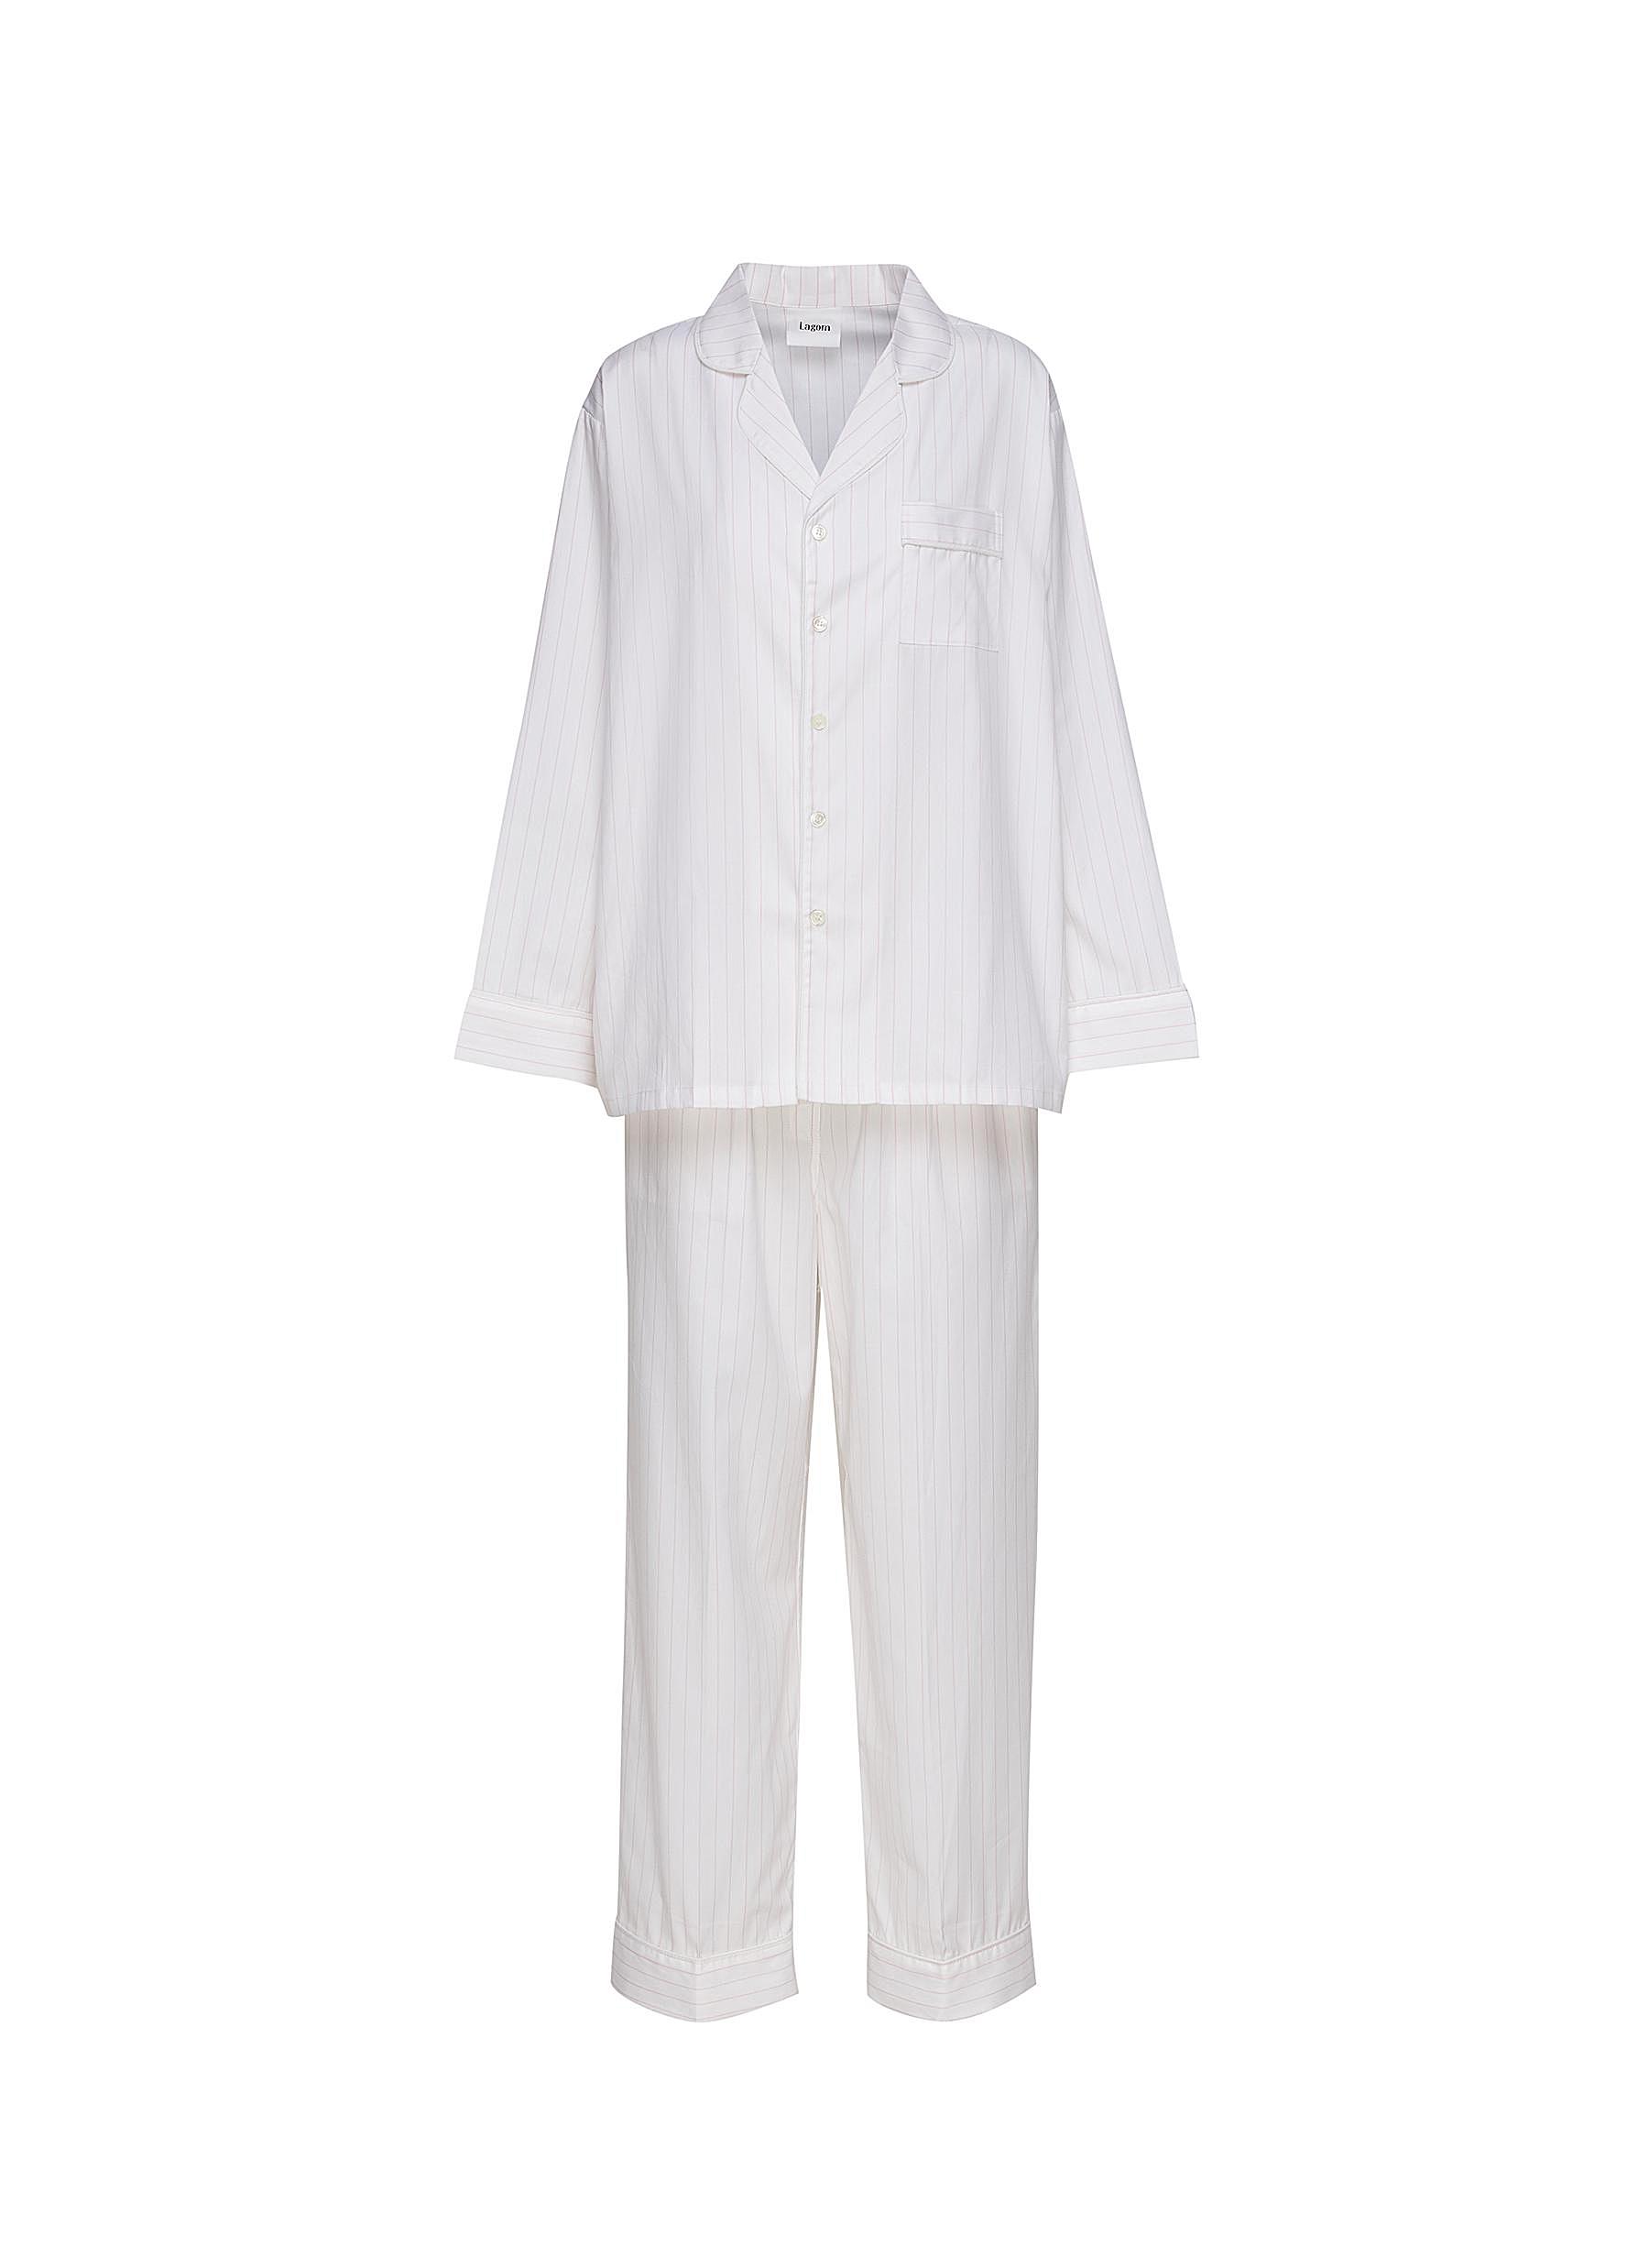 Lagom Small piped pyjama set - white/pink